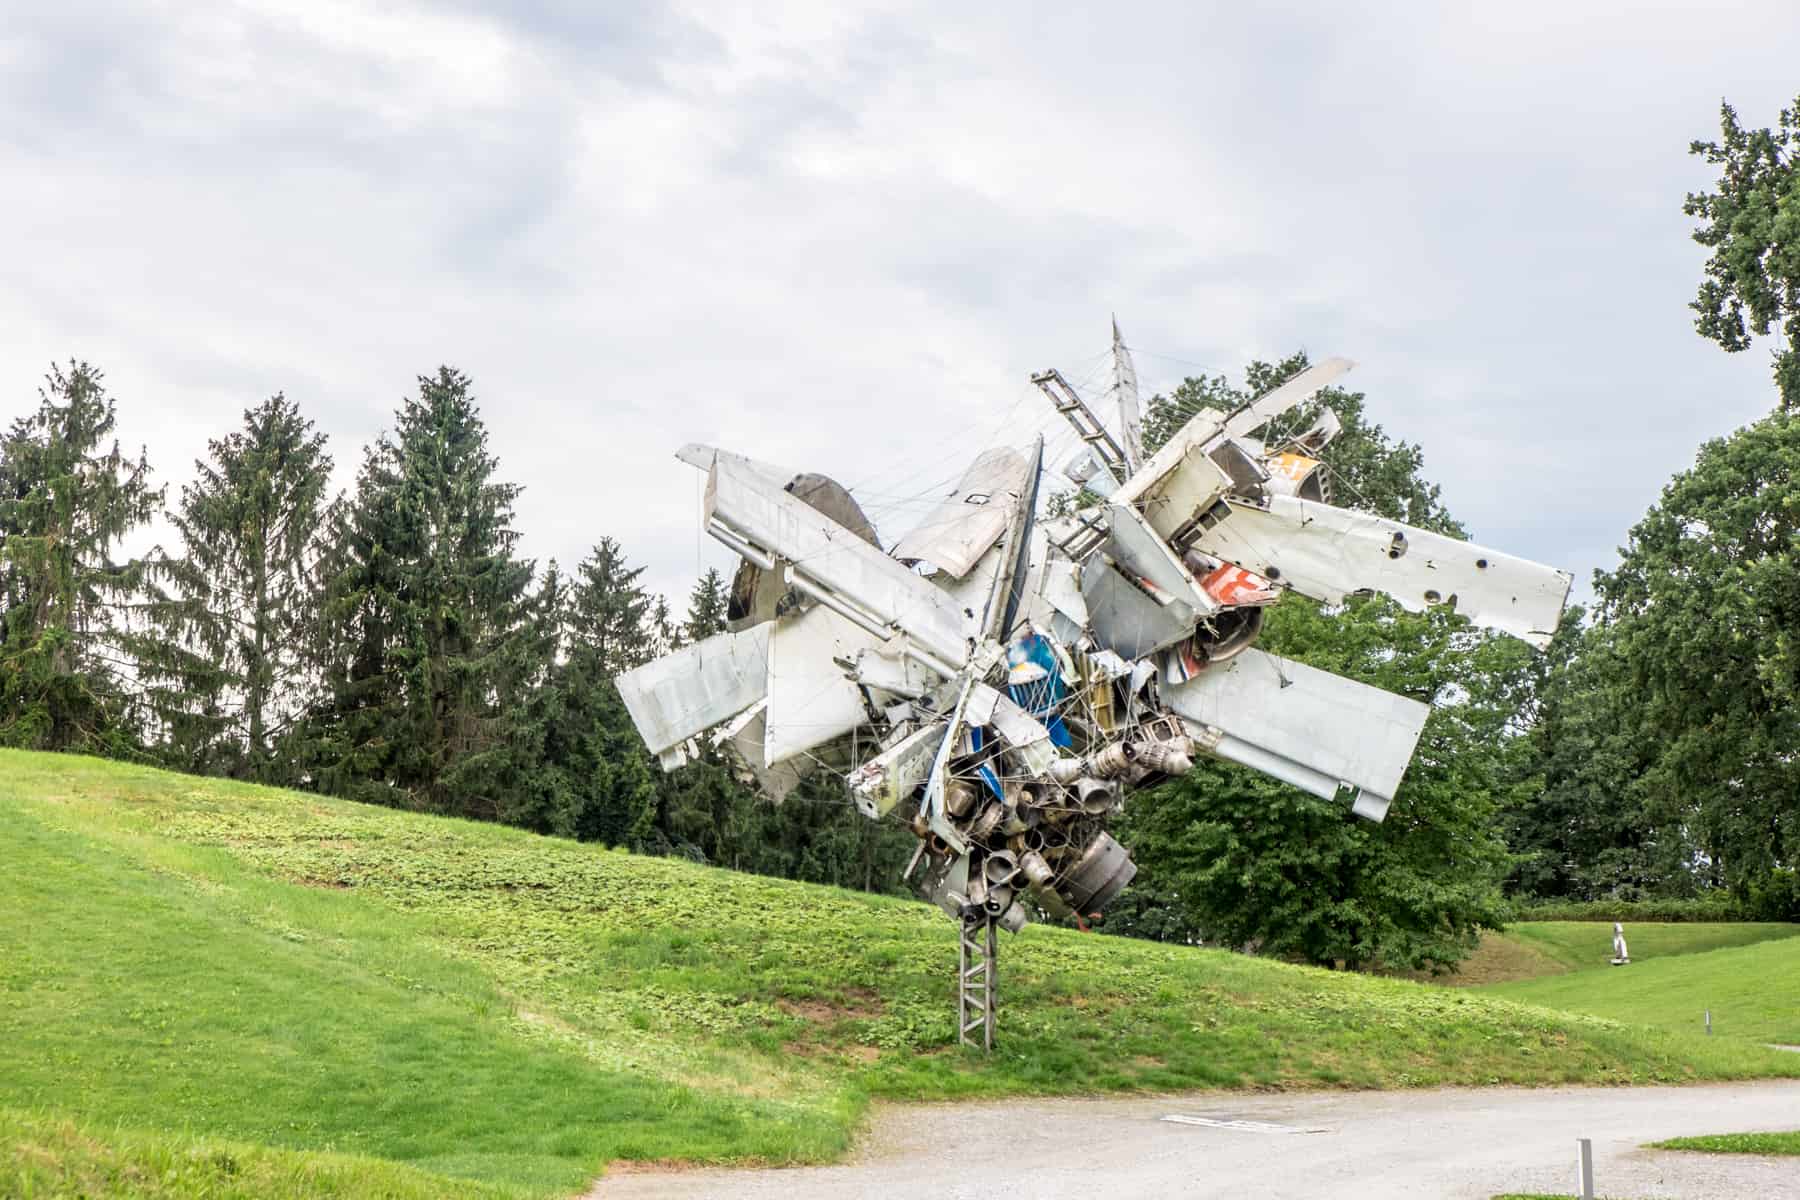 An artwork made up of scraps of airplane parts at the Austrian Sculpture Park near Graz